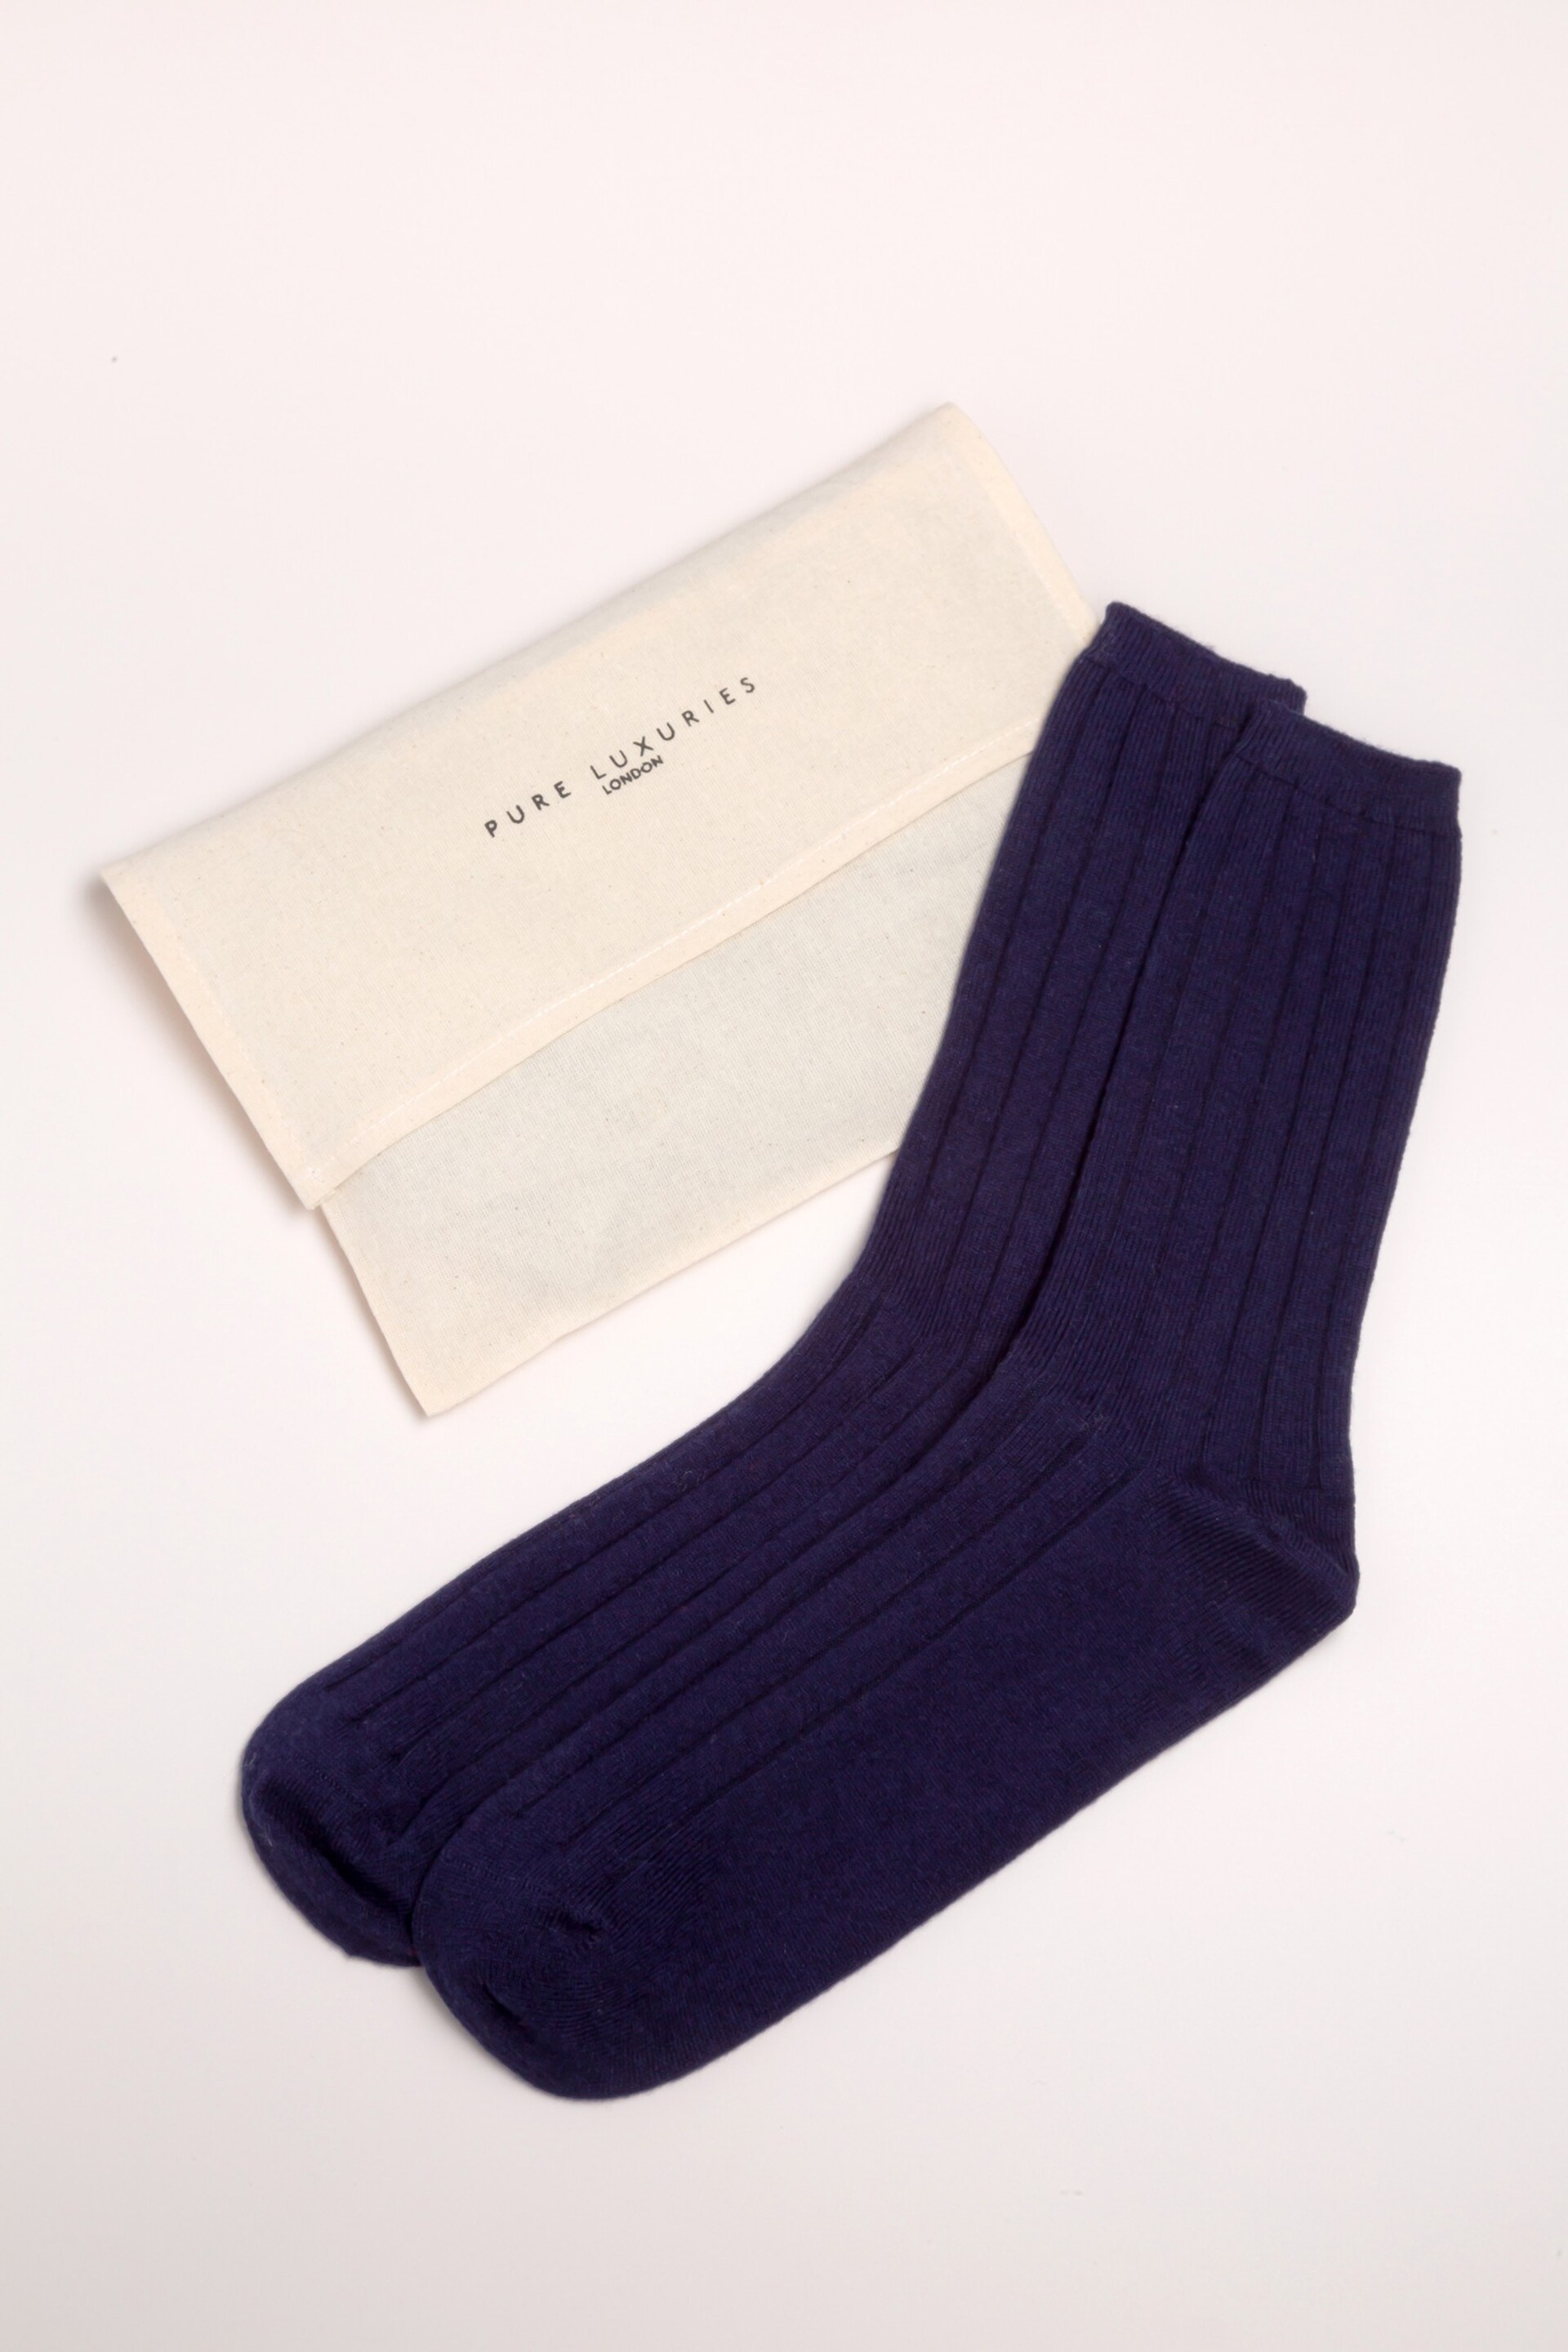 Pure Luxuries London Dalton Cashmere & Merino Wool Ribbed Socks - Image 3 of 3